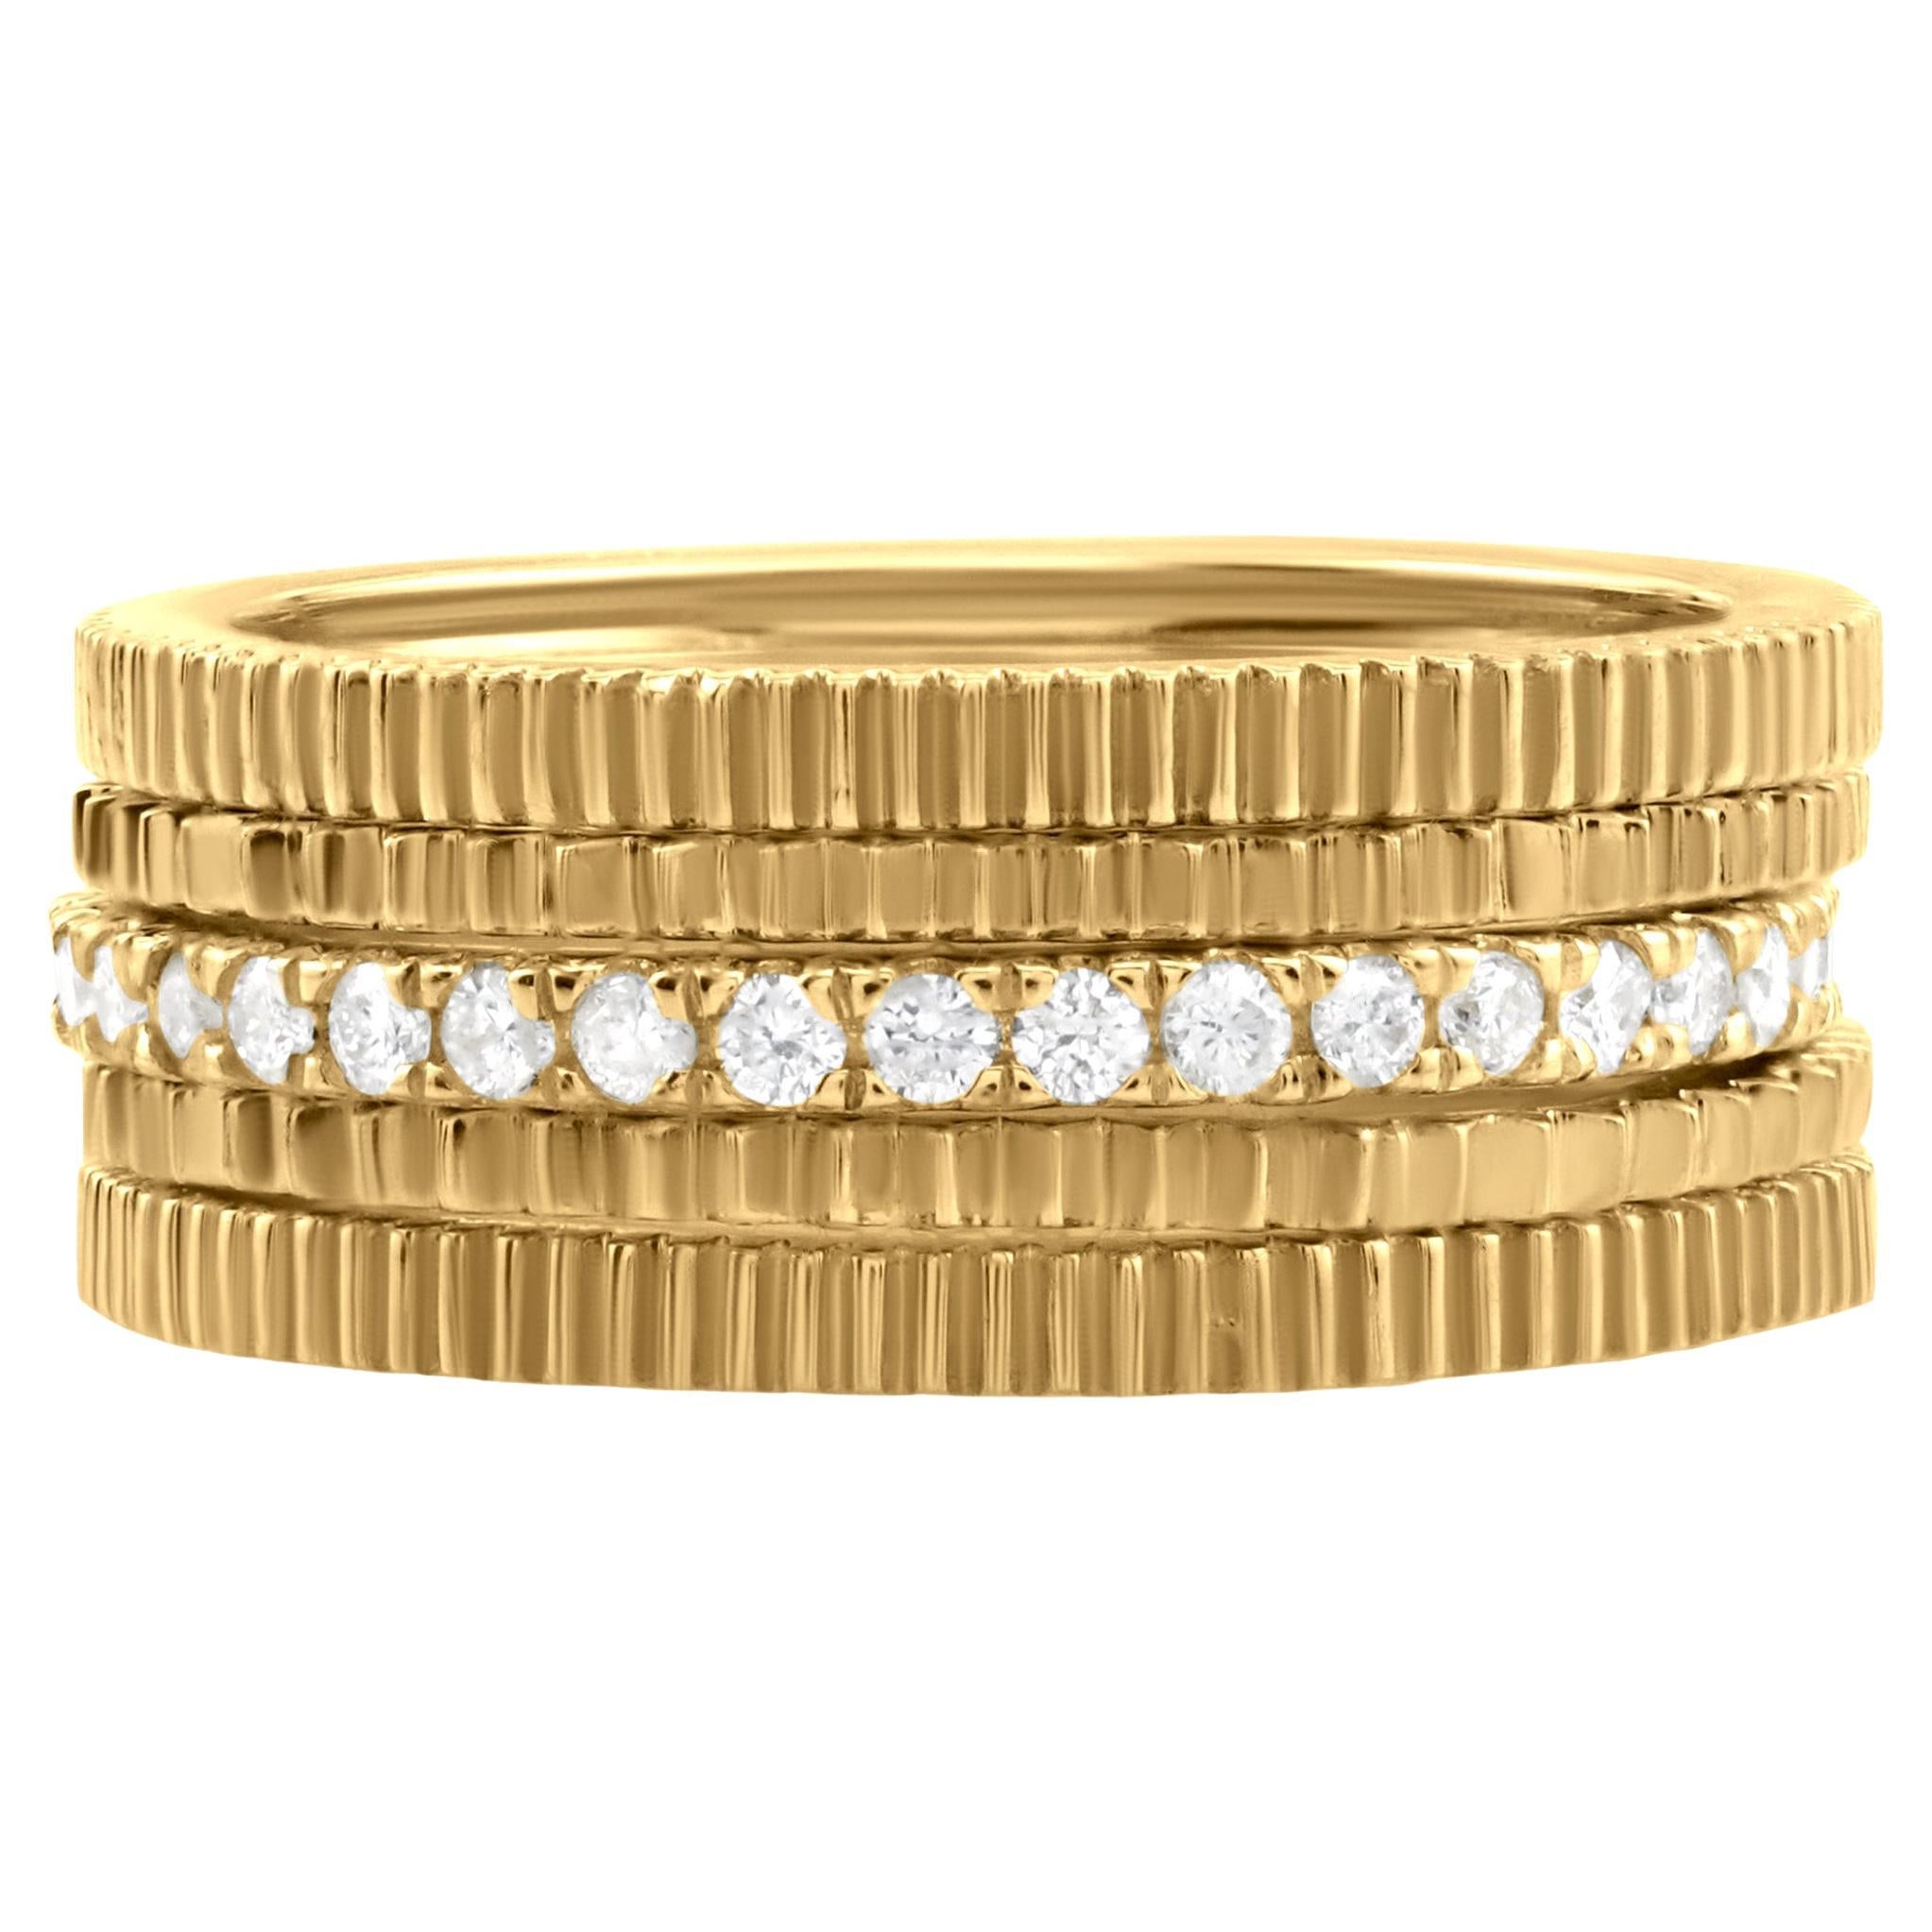 Luxle 0.56cttw. Diamond Set Ring in 14k Yellow Gold